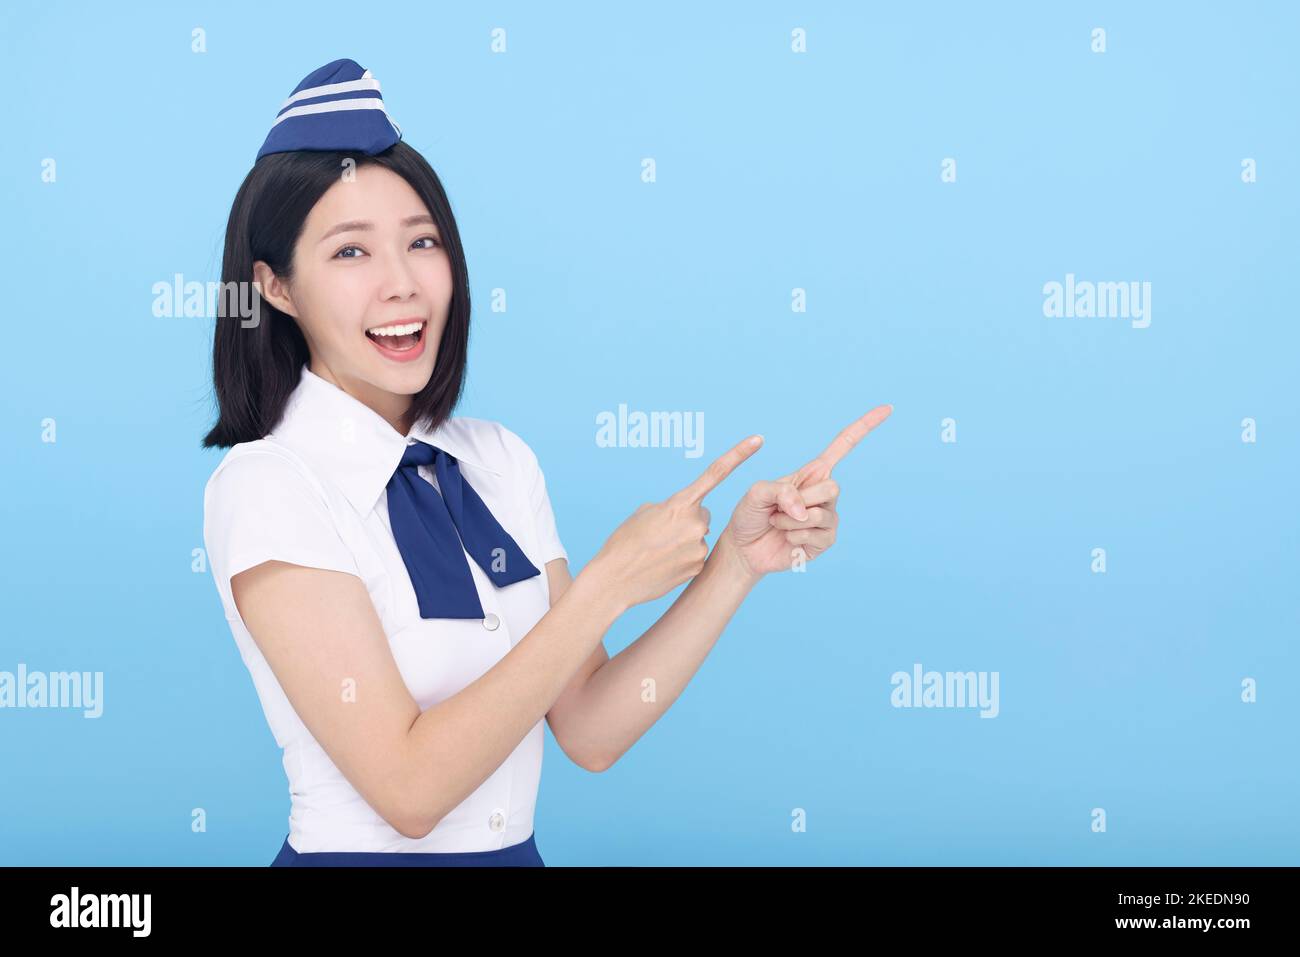 Happy Beautiful Airline stewardess showing something on blue background Stock Photo